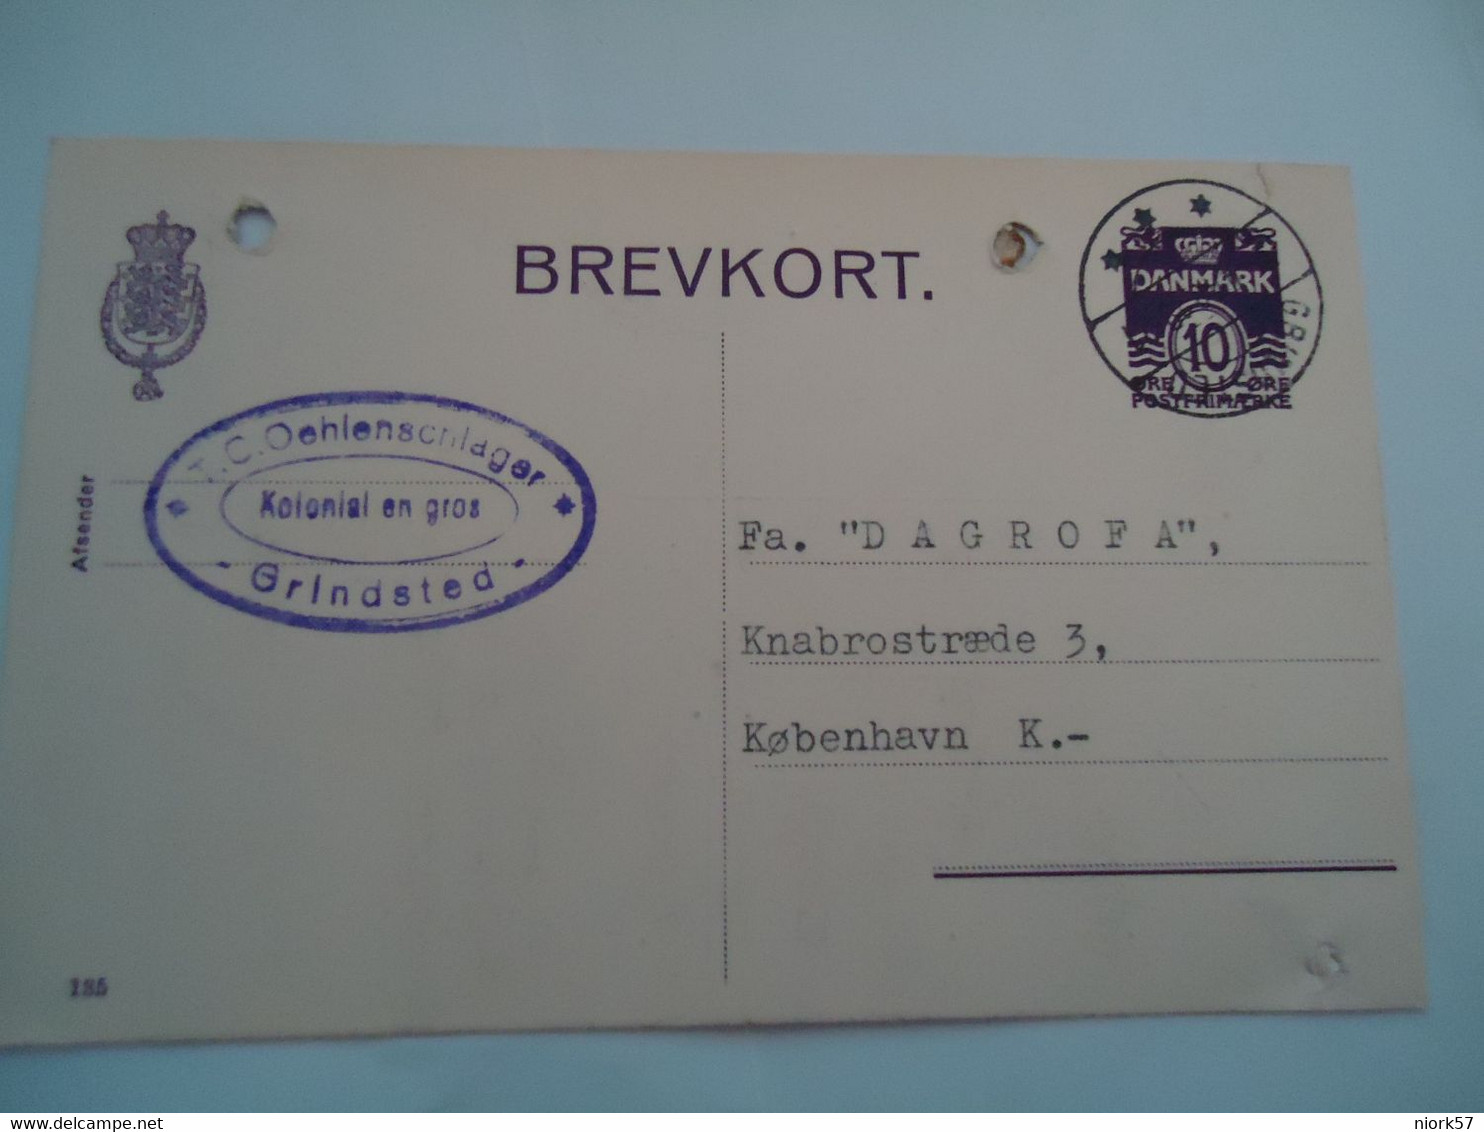 DENMARK BREVKORT  1940  GRINDSTED  2 SCAN - Maximumkarten (MC)